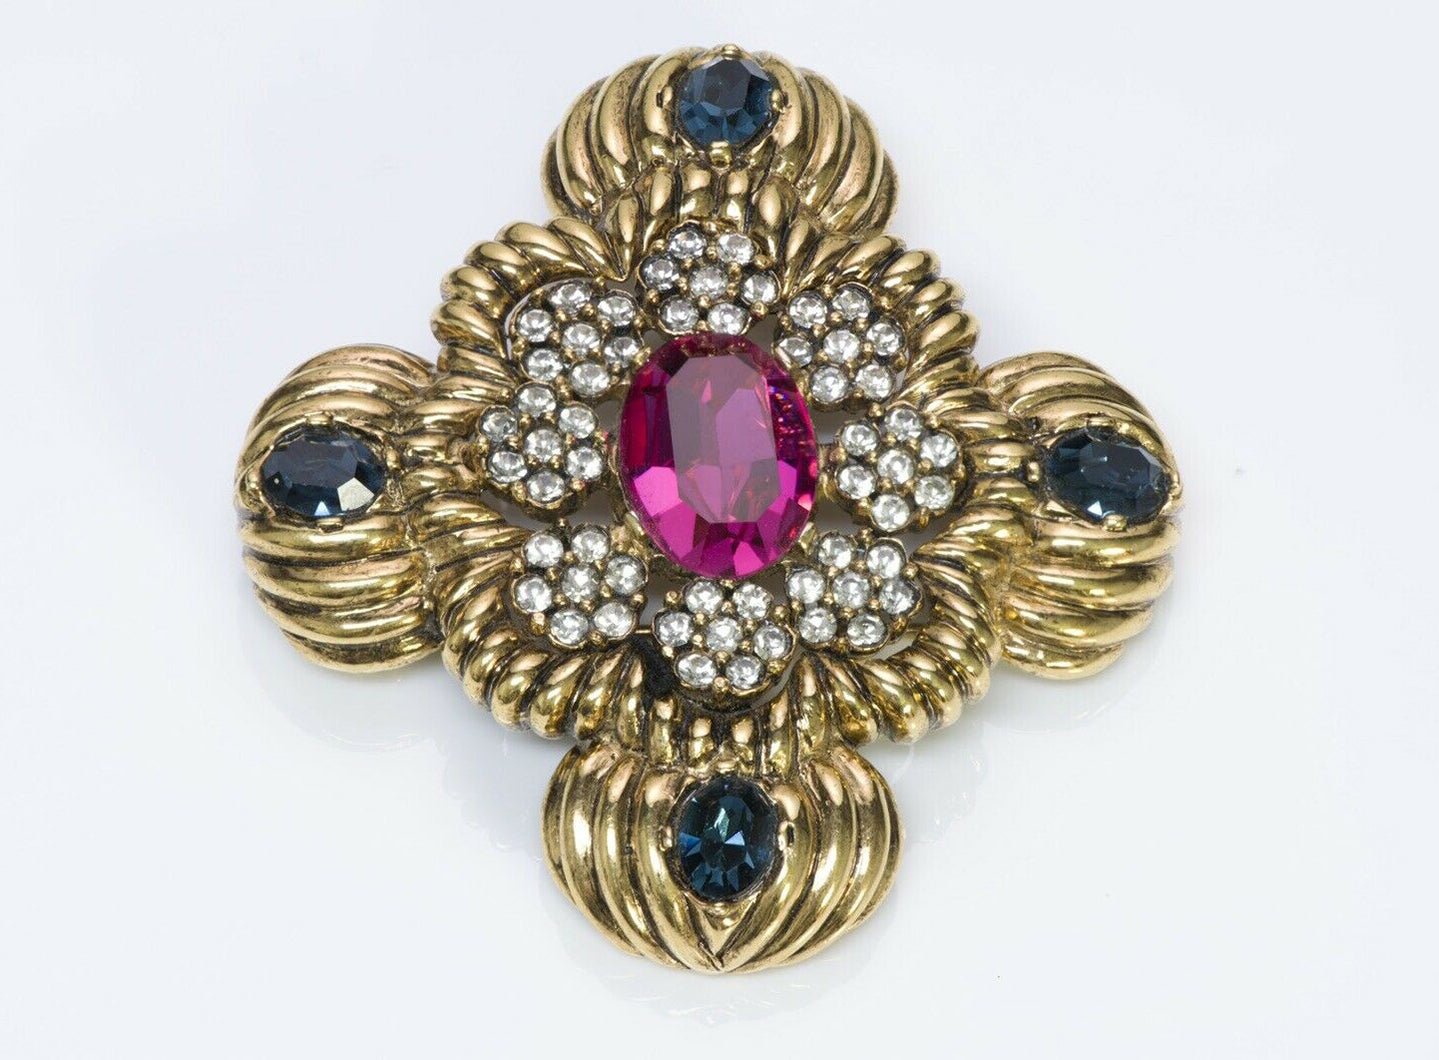 CINER Jewels of India Pink Blue Crystal Maltese Cross Pendant Brooch